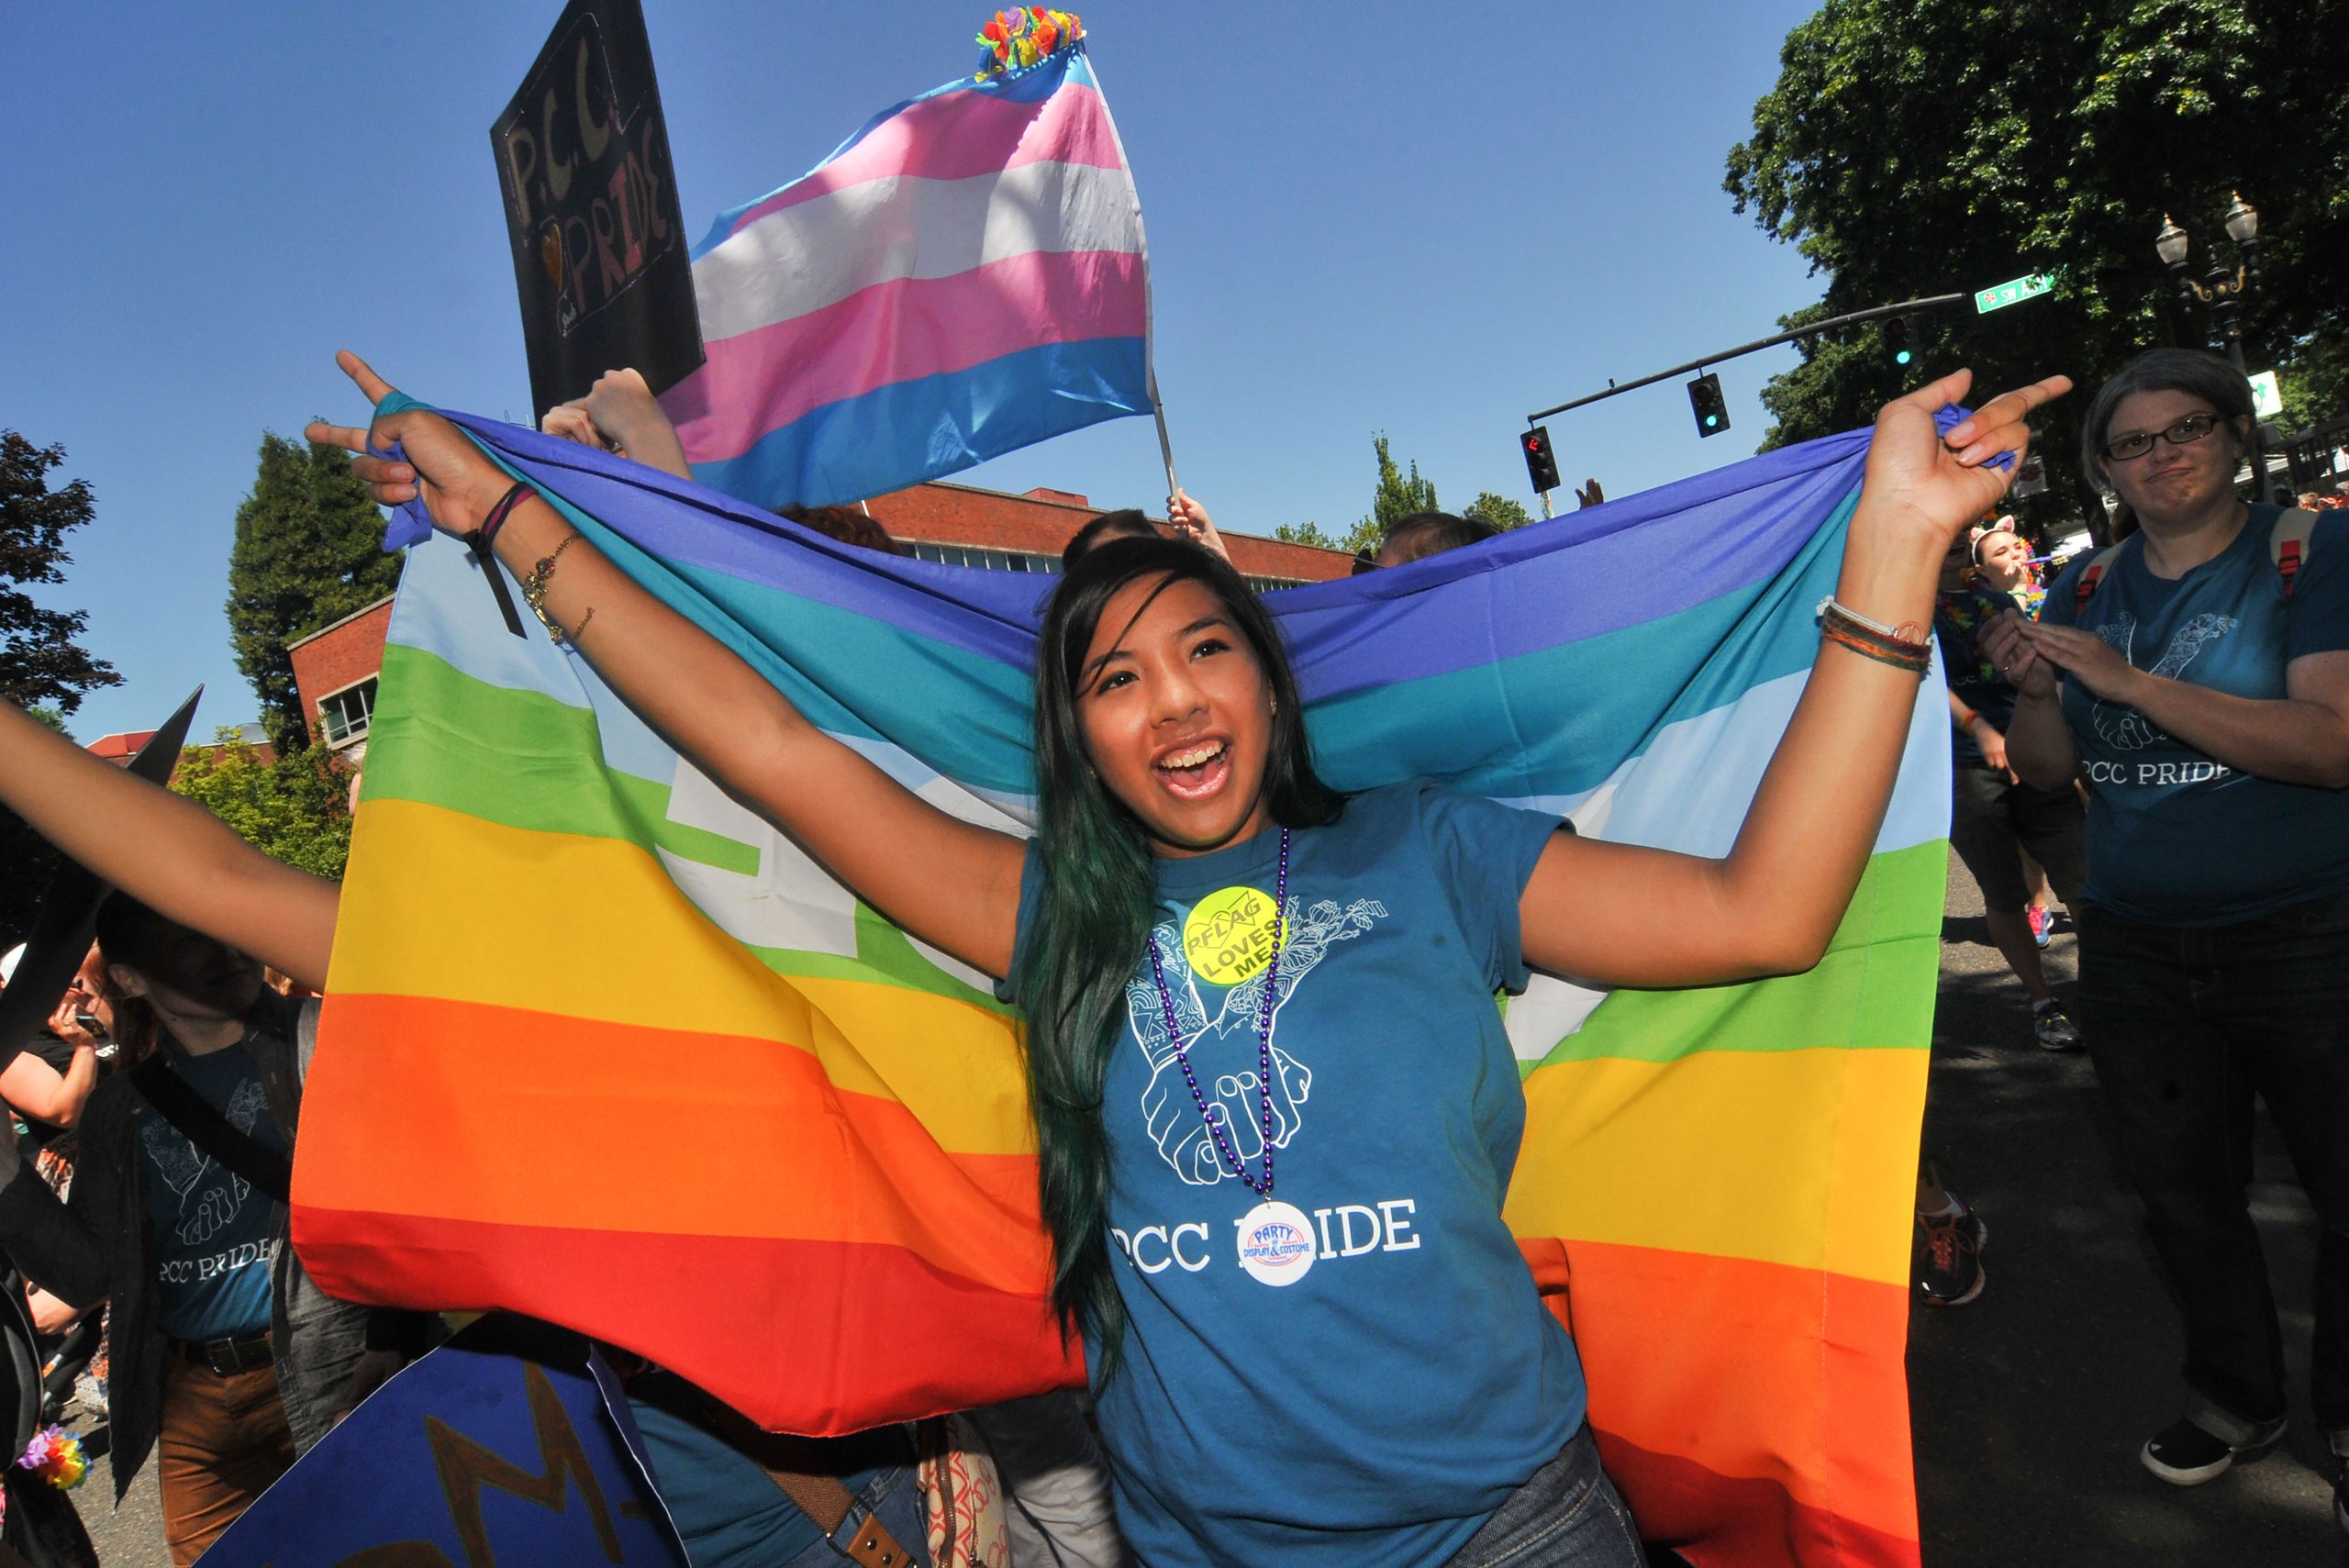 PCC Student holding a rainbow flag